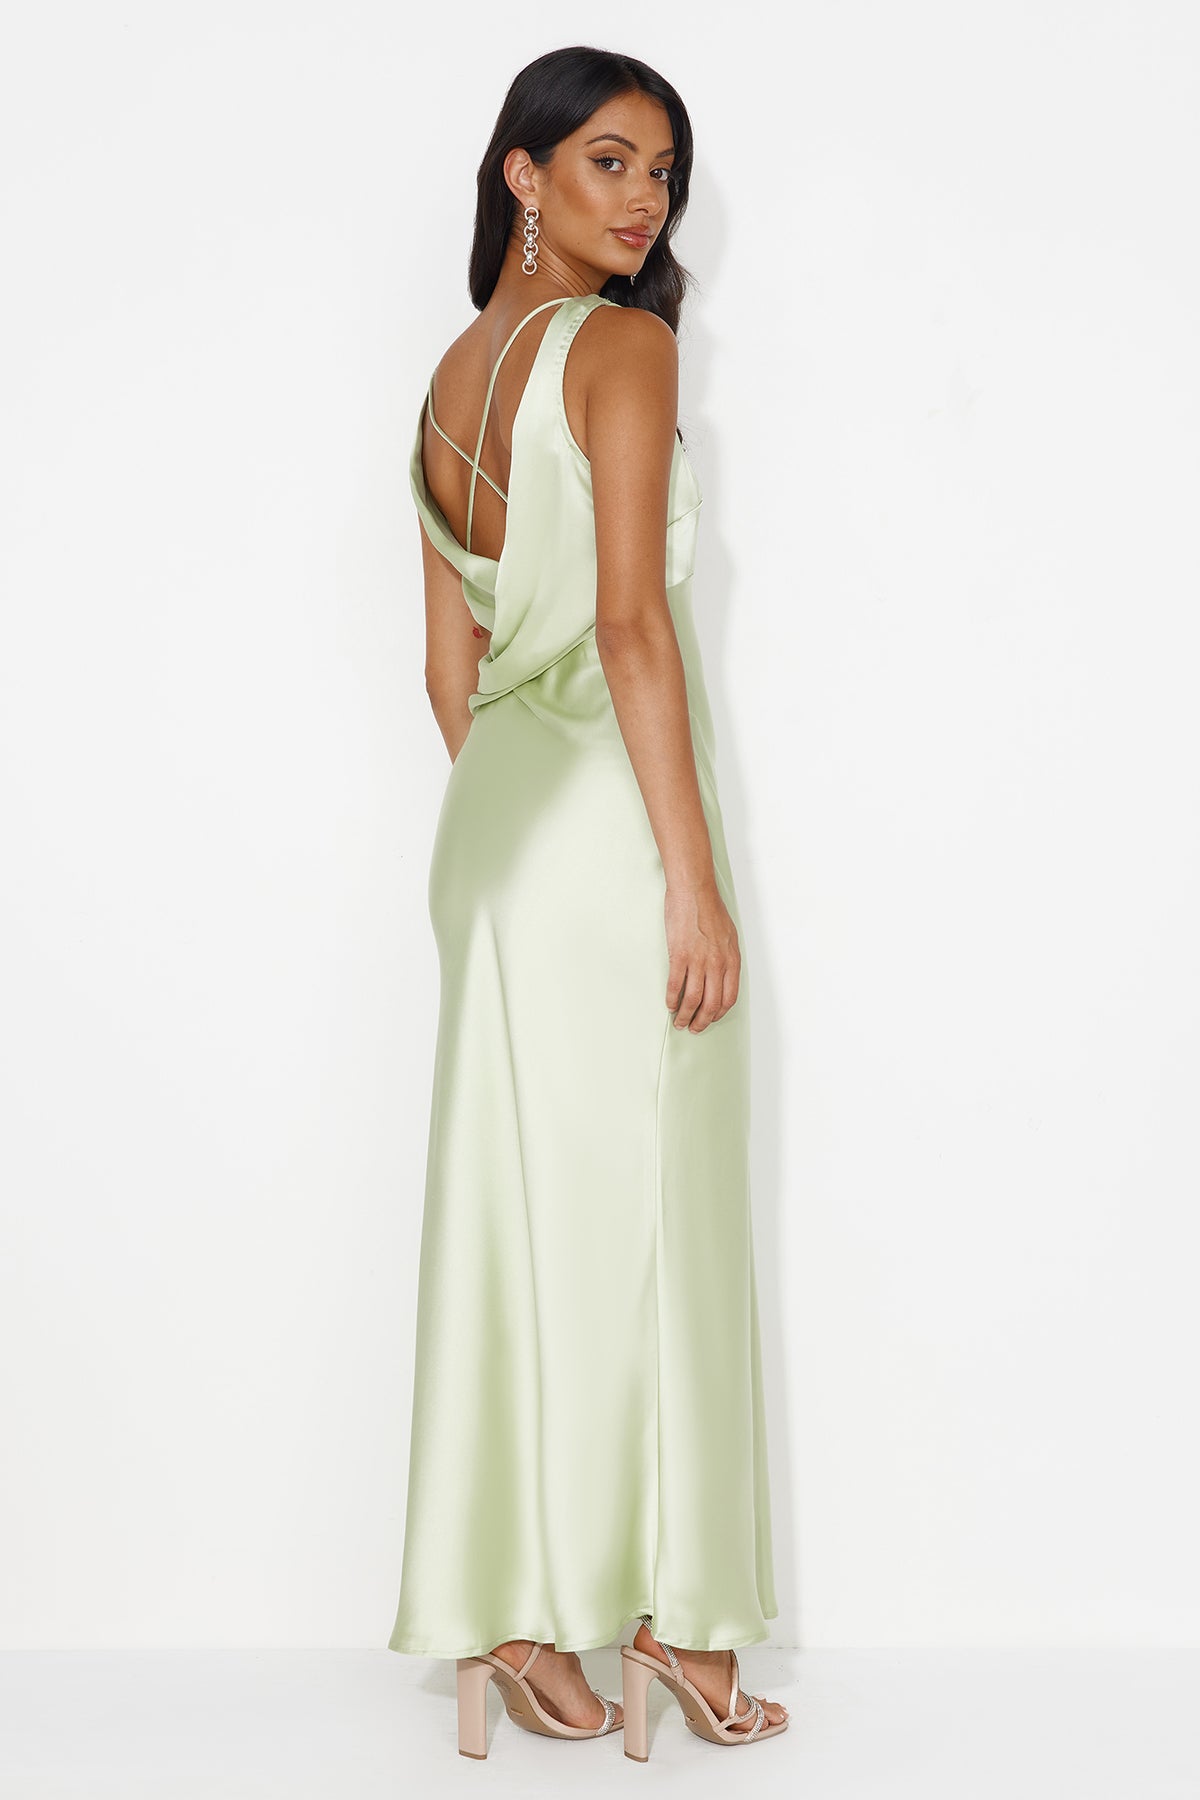 Shop Formal Dress - Indigo Fields Satin Maxi Dress Green sixth image